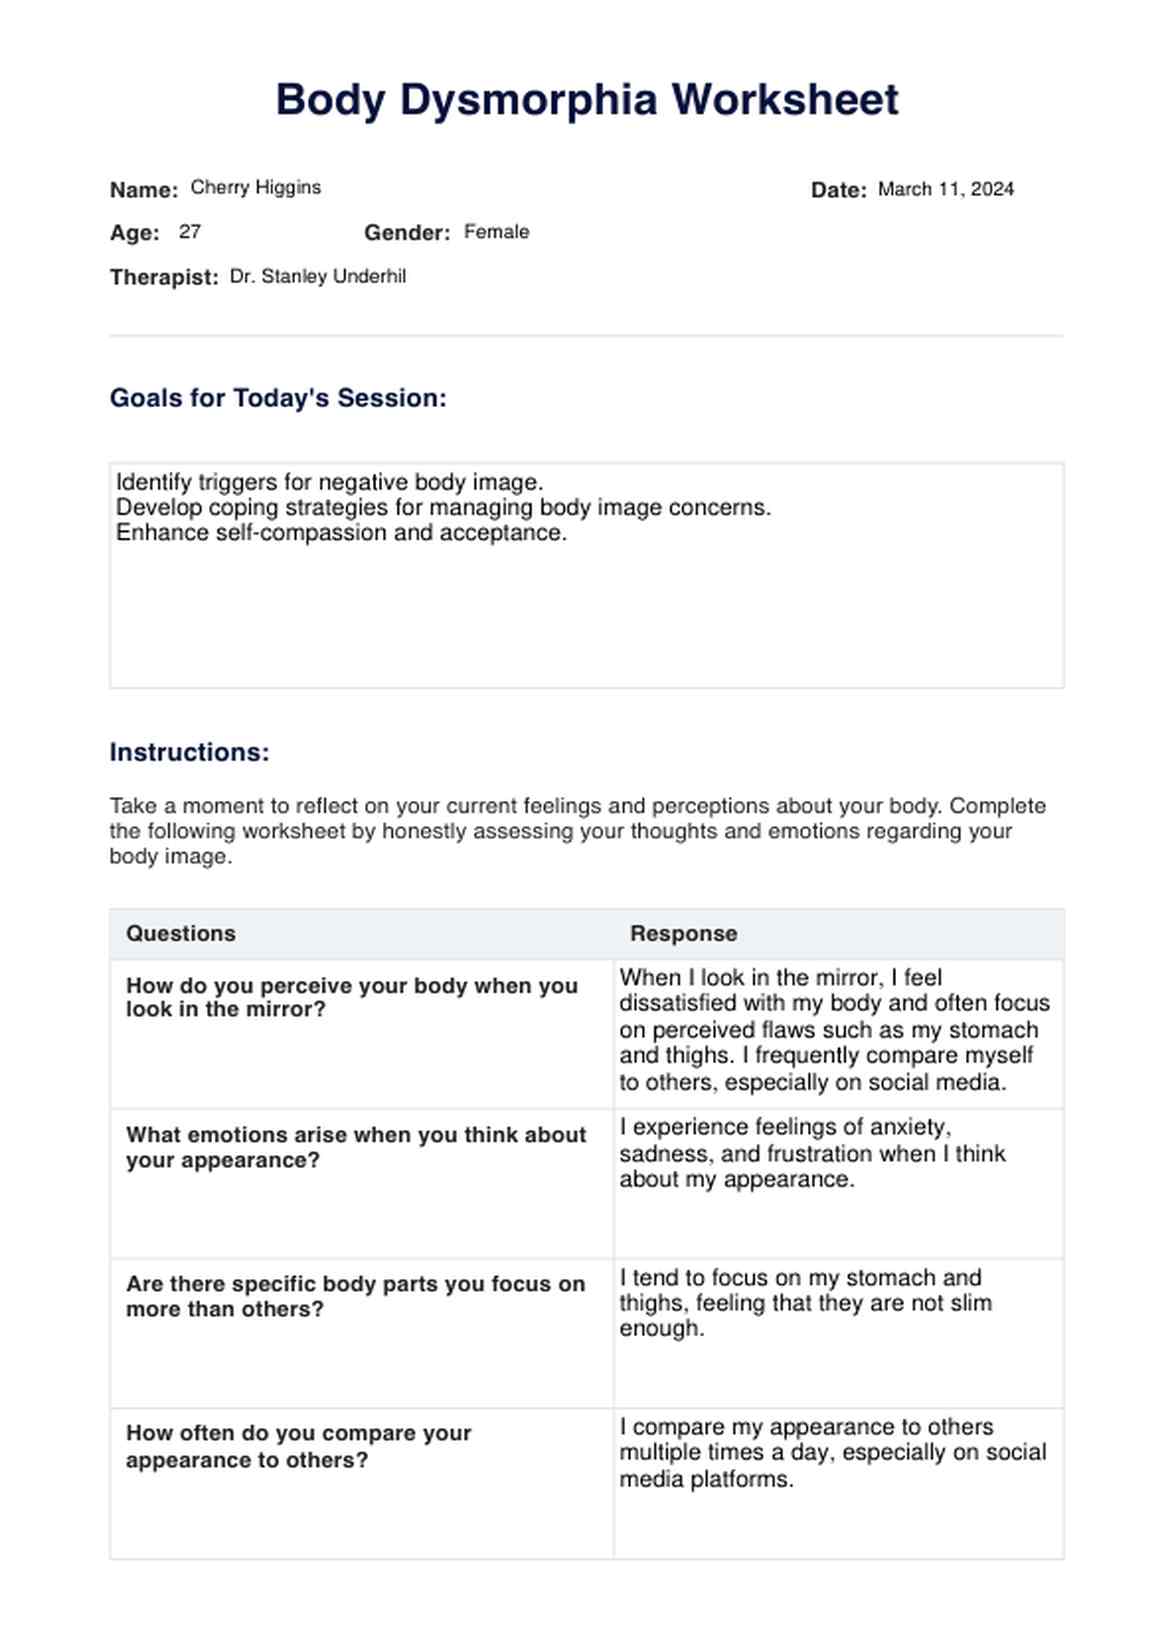 Body Dysmorphia Worksheet PDF Example